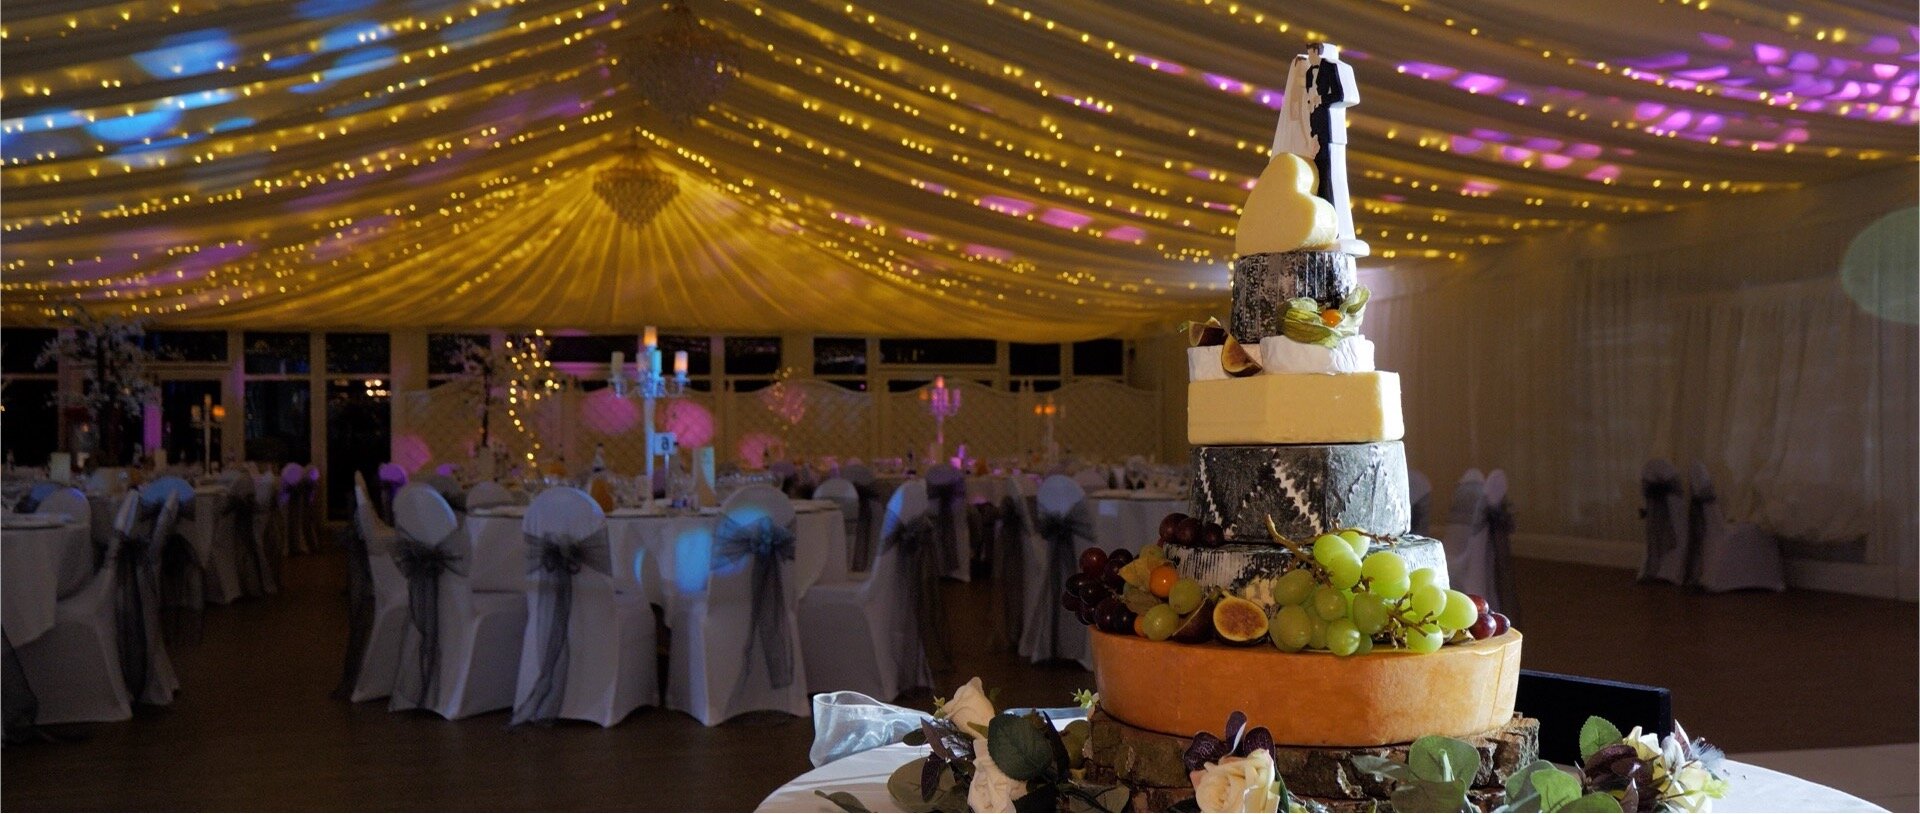 Cheese Cake wedding cake video Essex.jpg